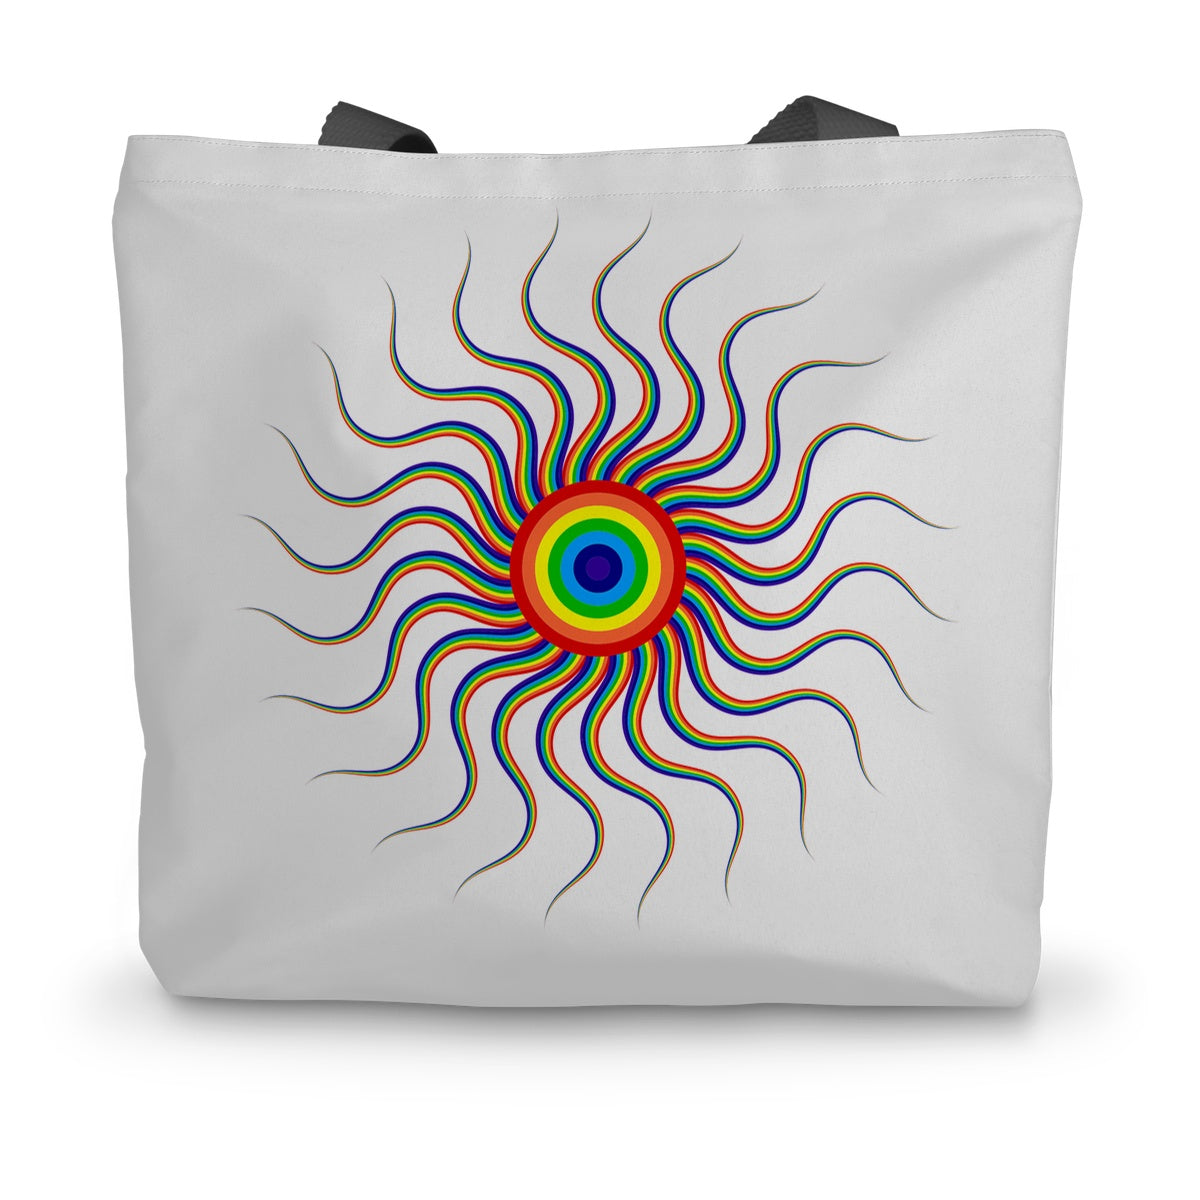 Colourful Wavy Sun Canvas Tote Bag